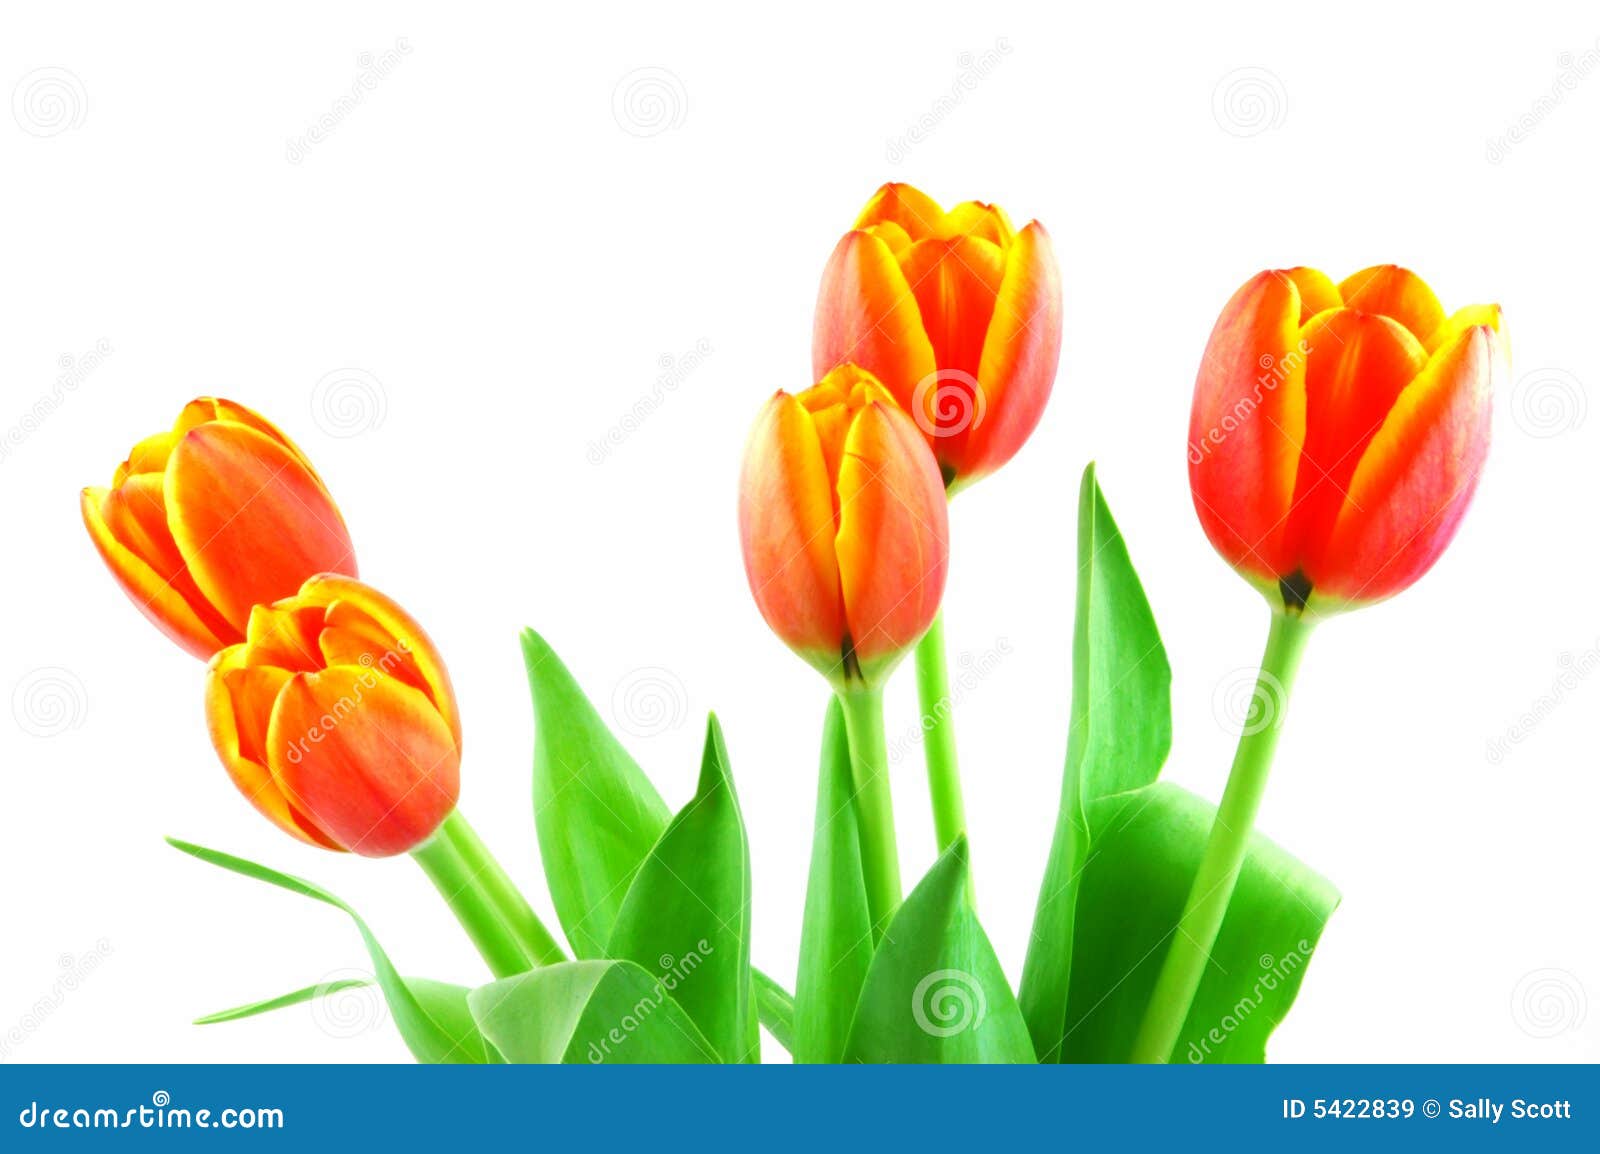 Orange tulips stock image. Image of bunch, bulb, petals - 5422839